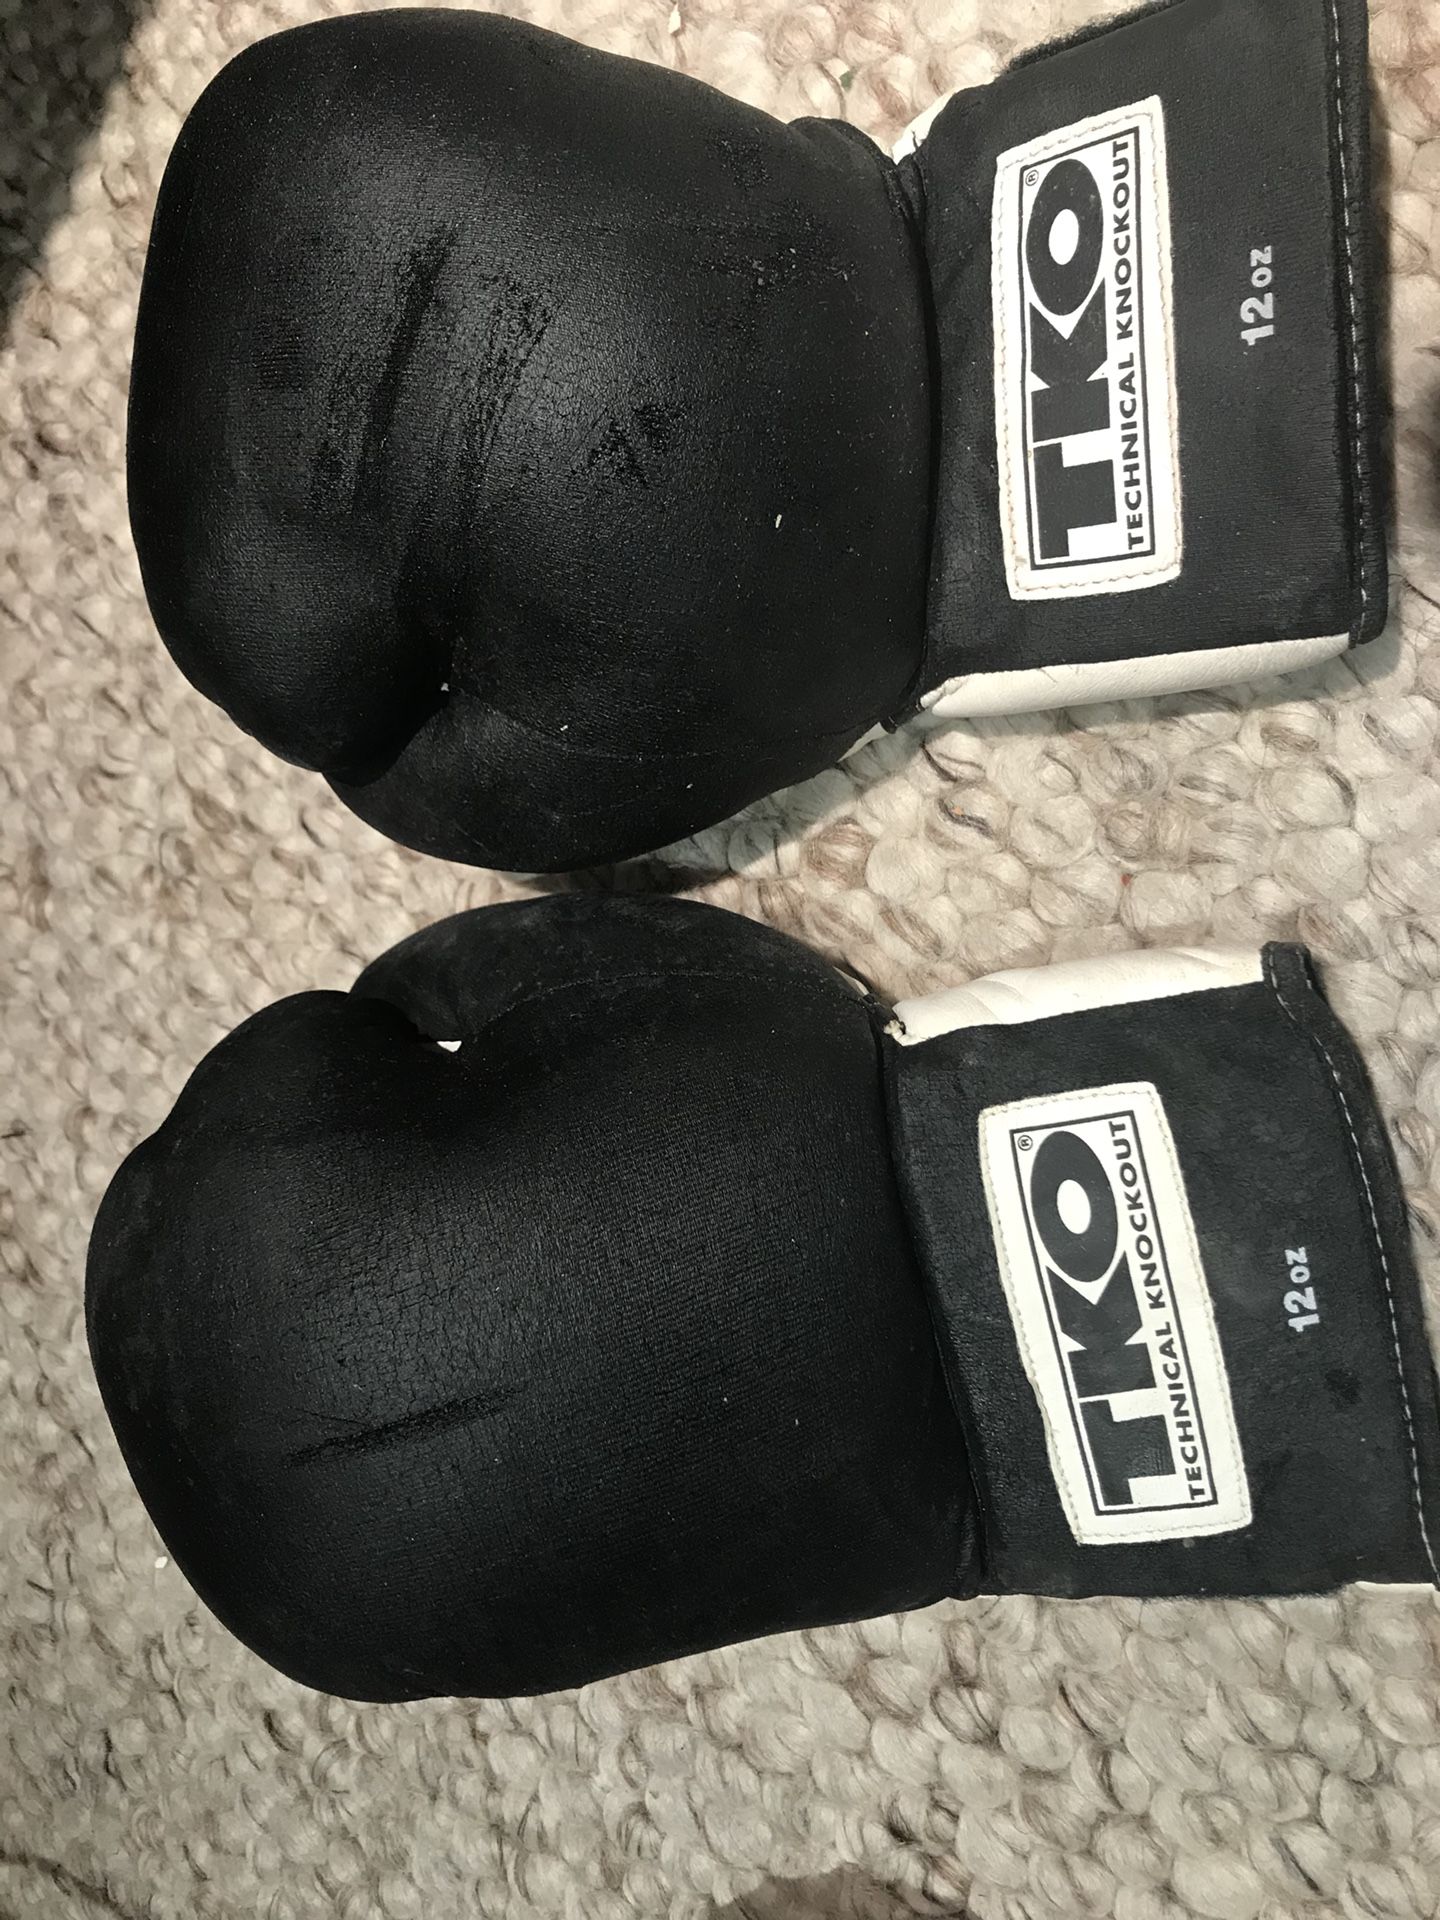 Boxing gloves pair Punching gloves